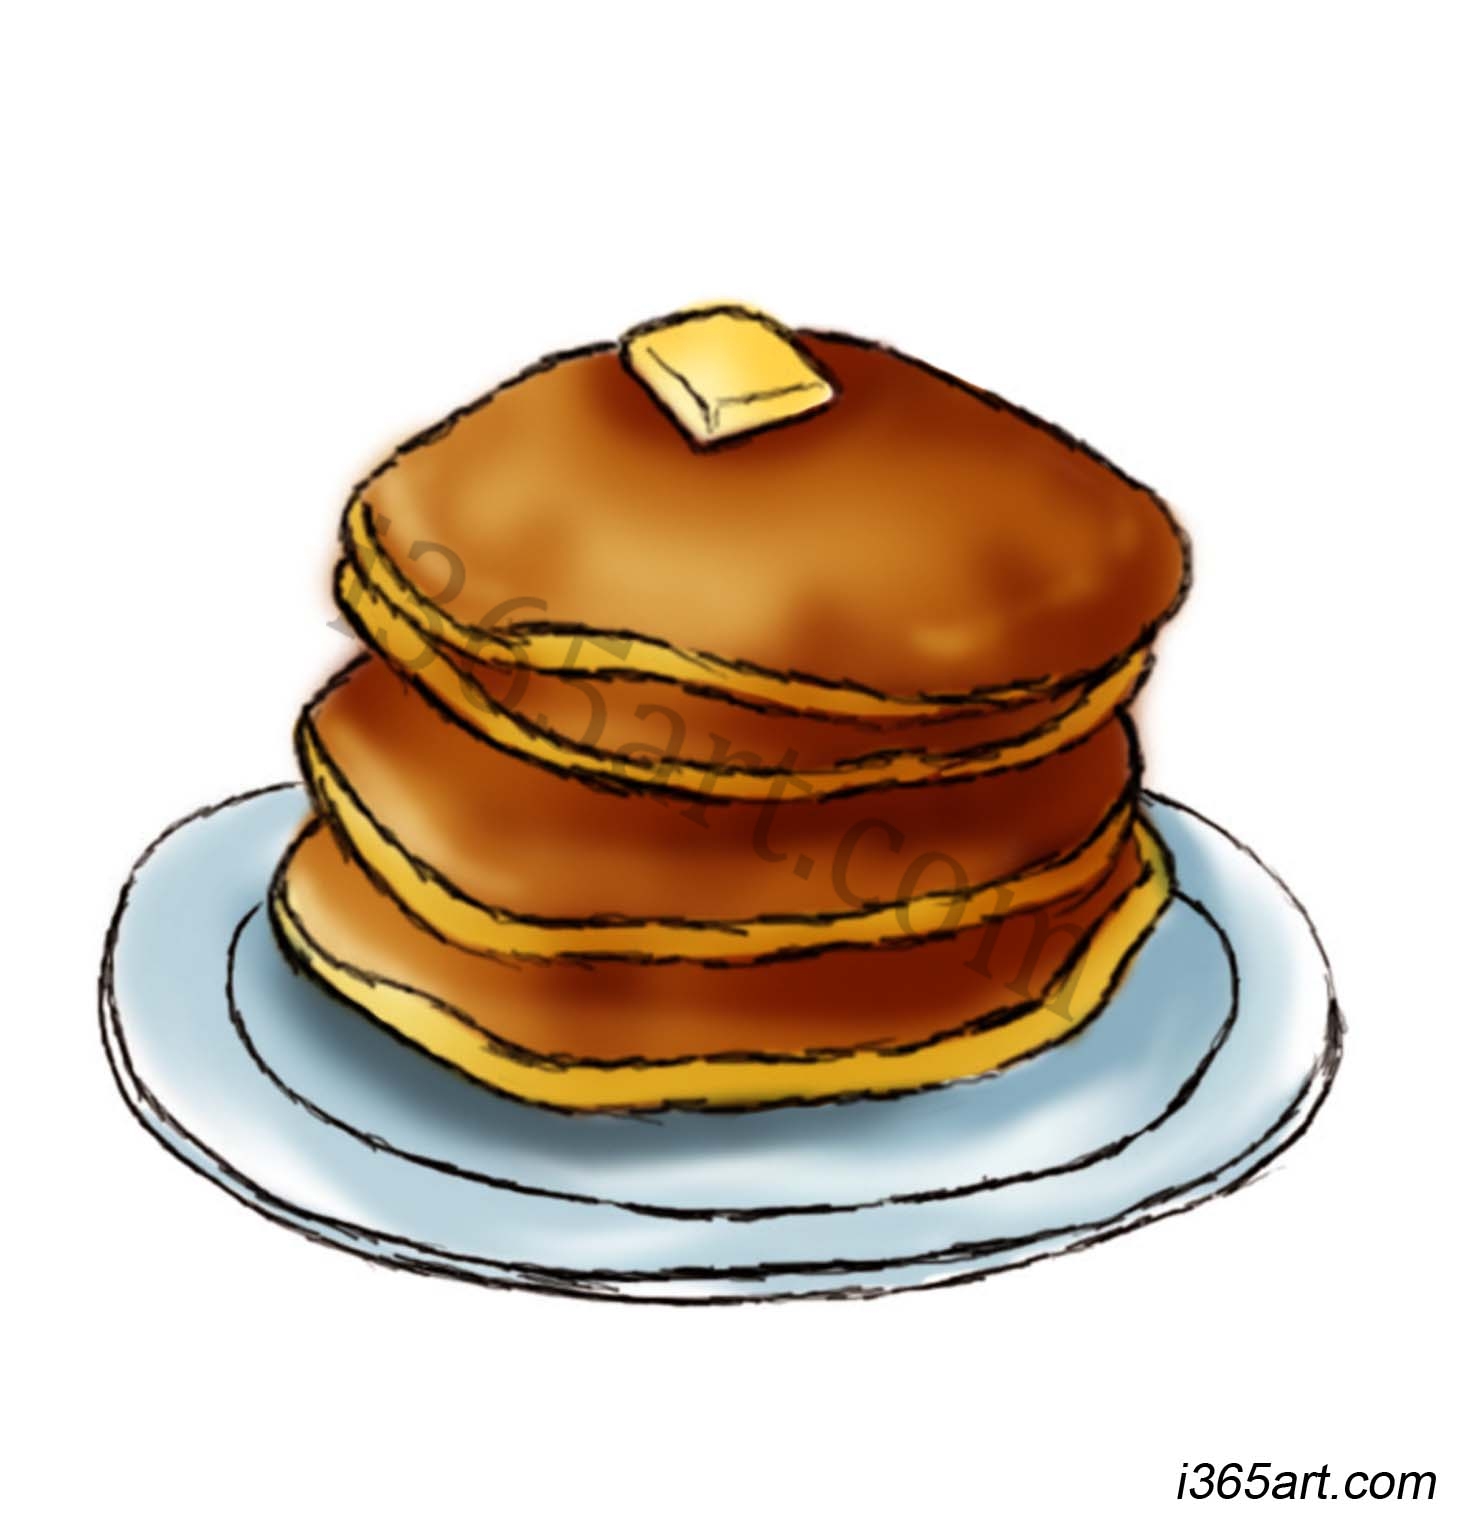 Pancake breakfast